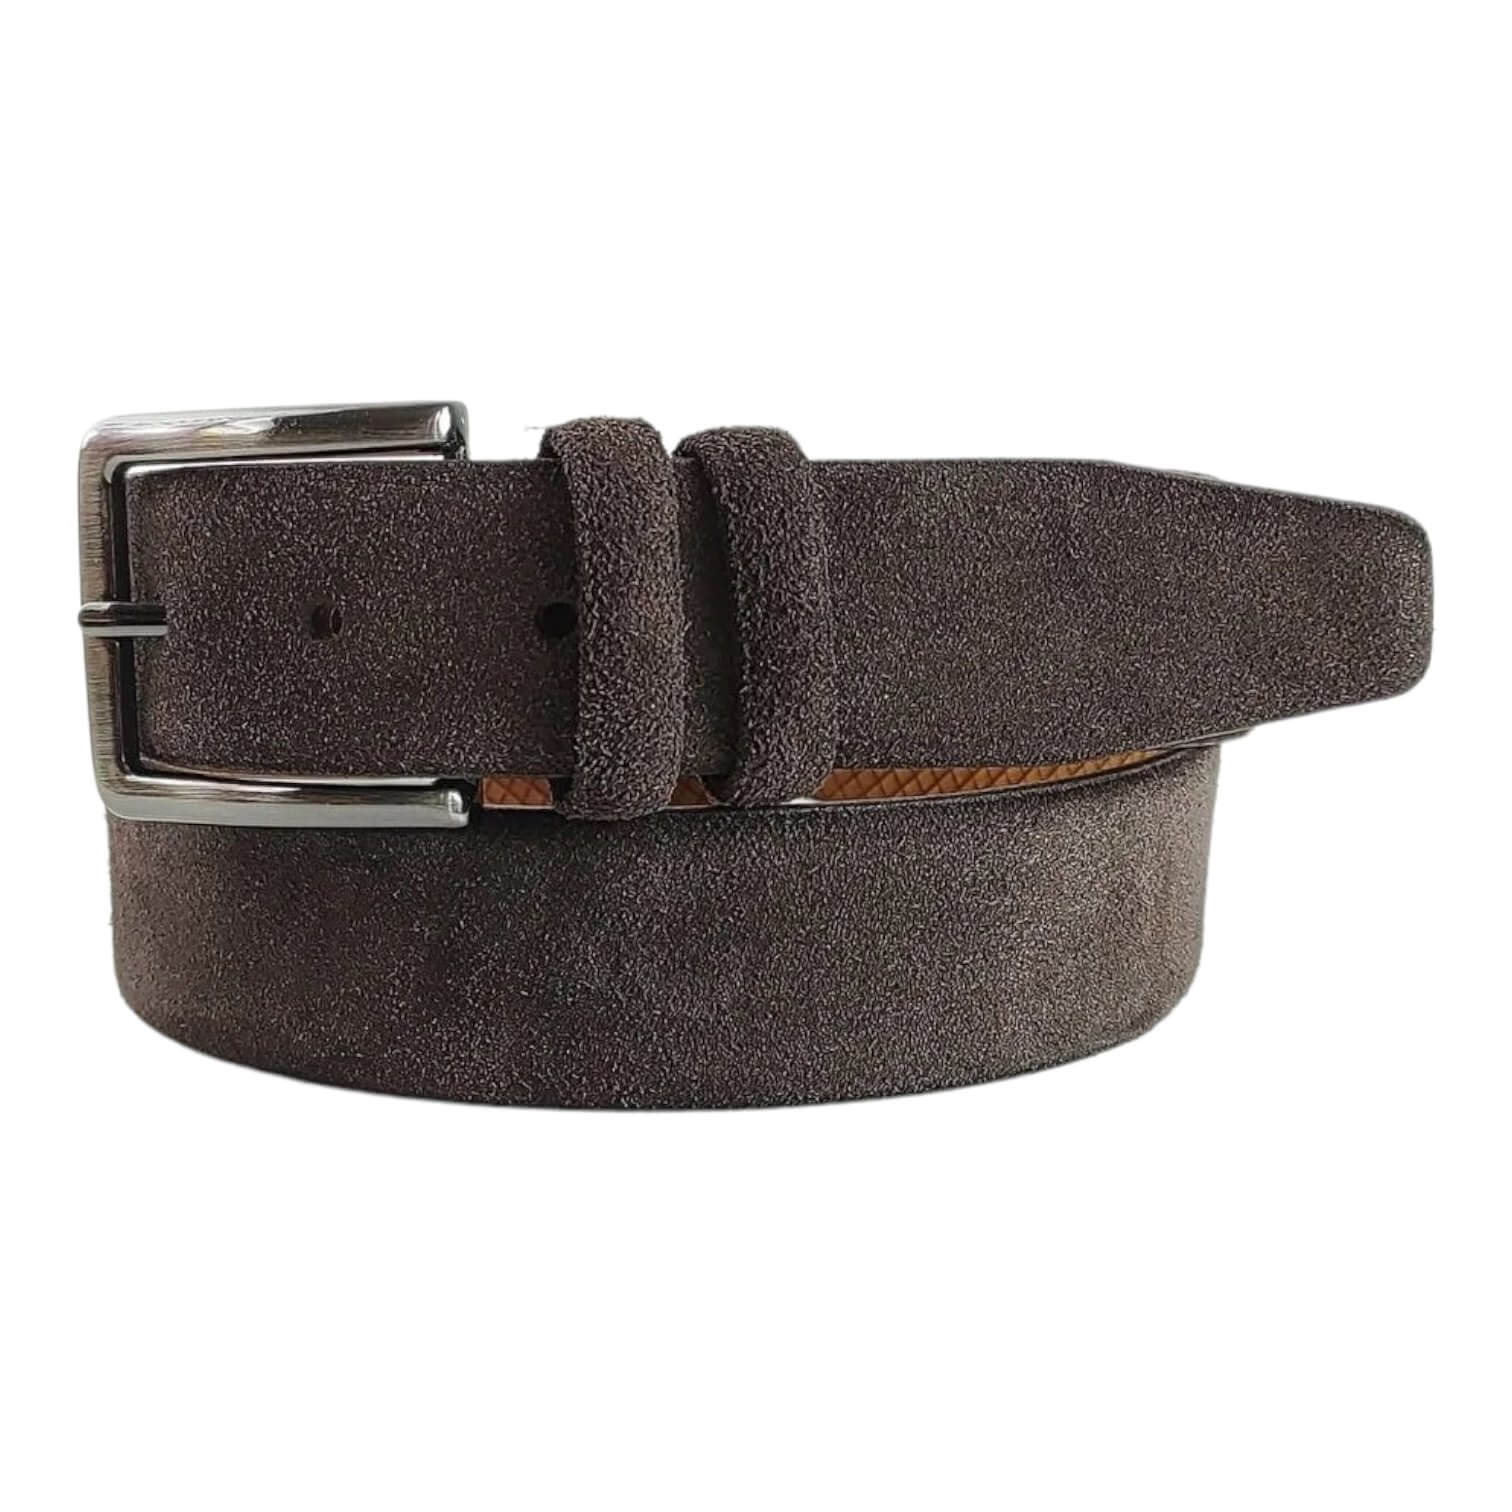 Bark brown suede leather belt